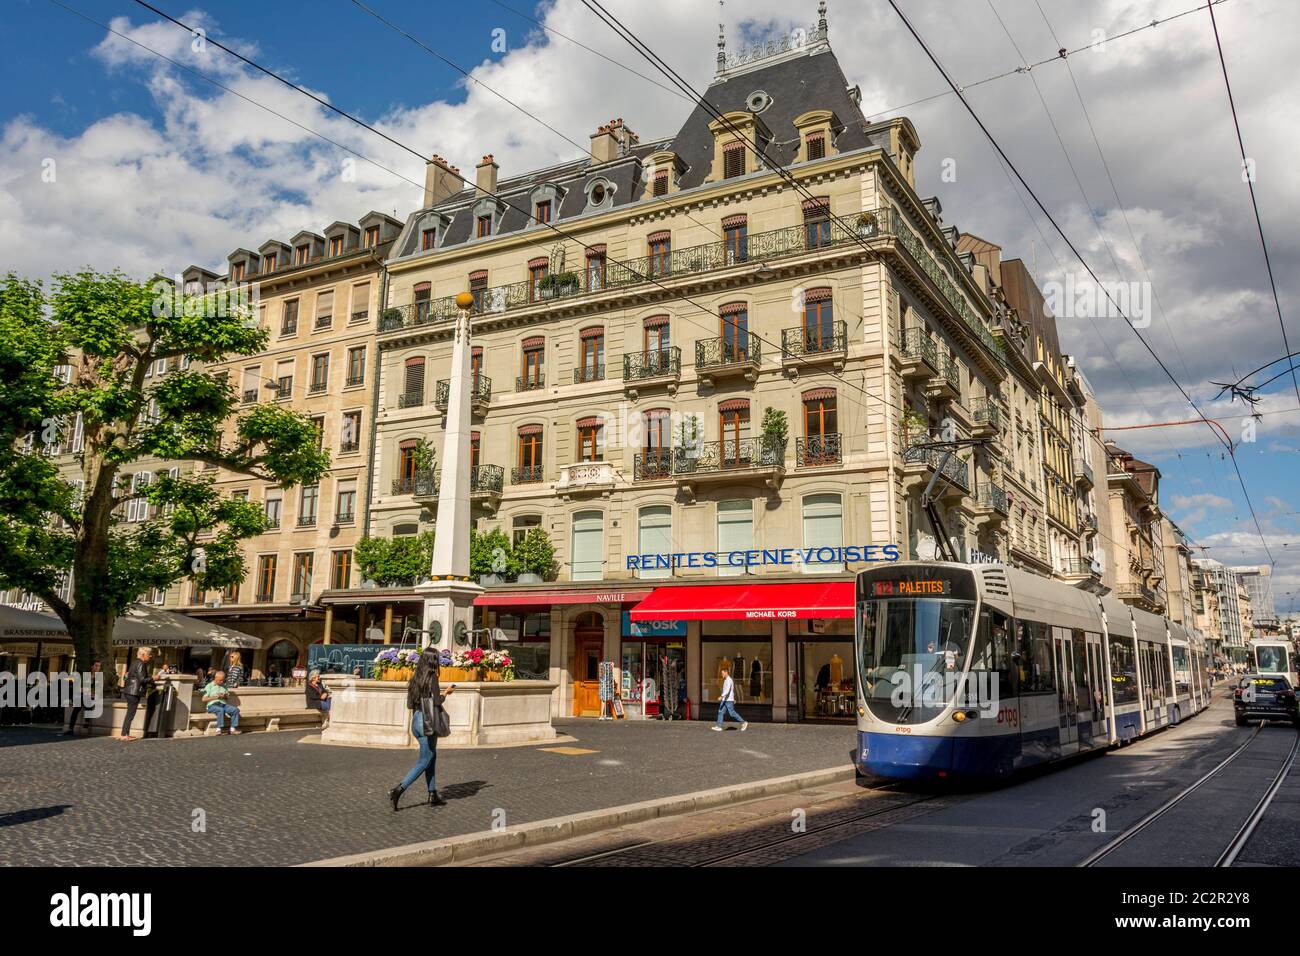 Louis Vuitton Store in the Shopping Street of Geneva Editorial Stock Image  - Image of geneva, vuitton: 60579049